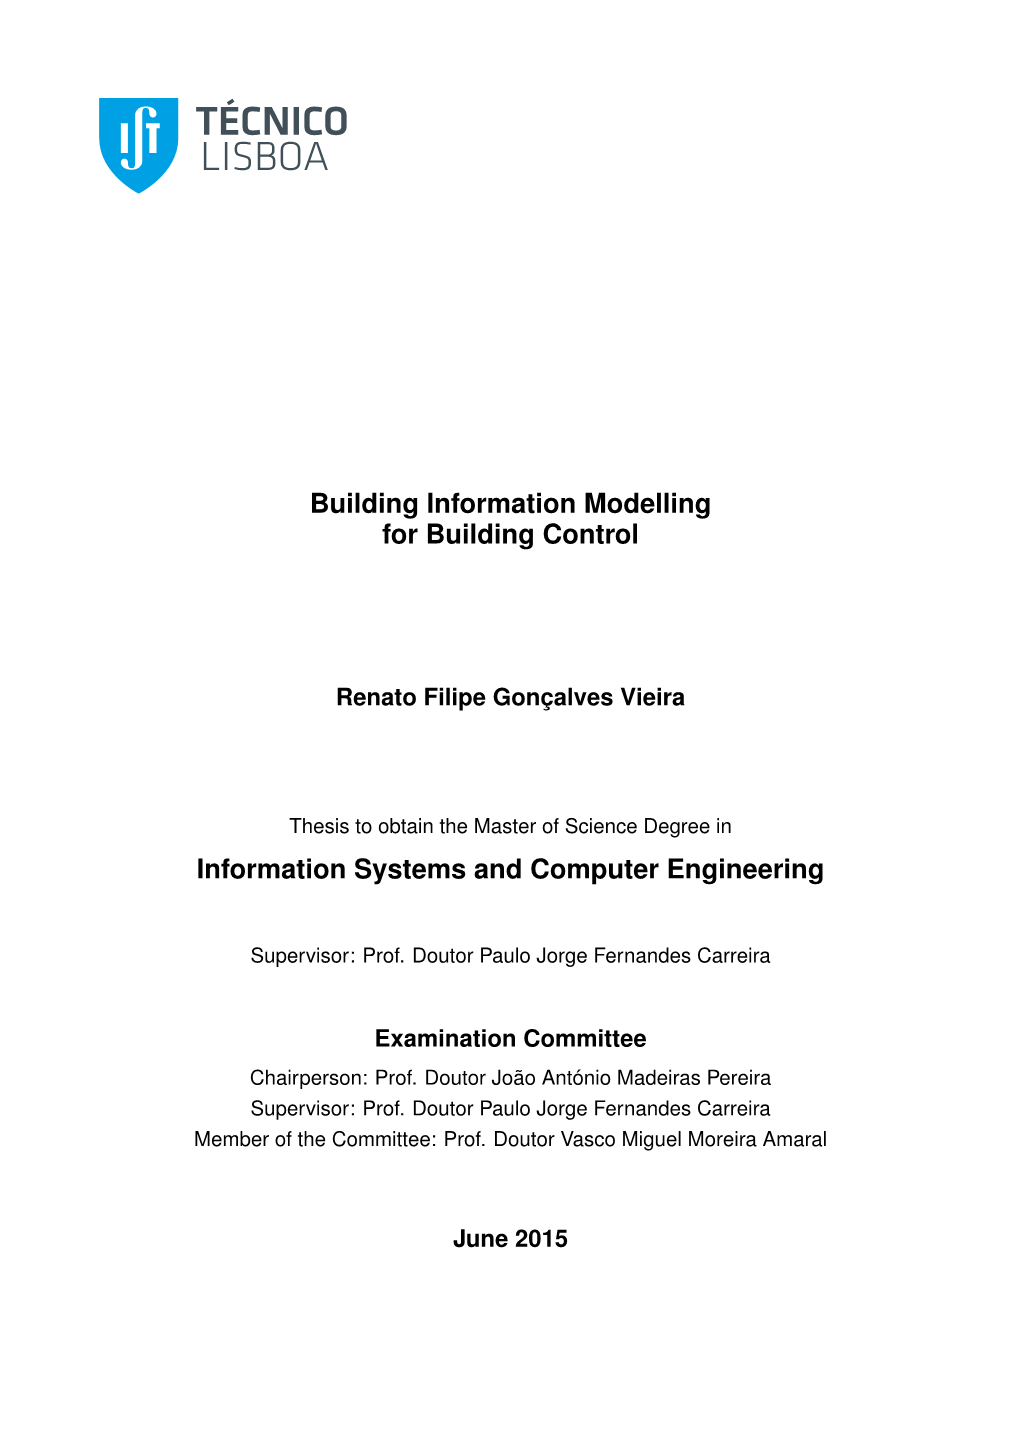 Building Information Modelling for Building Control Information